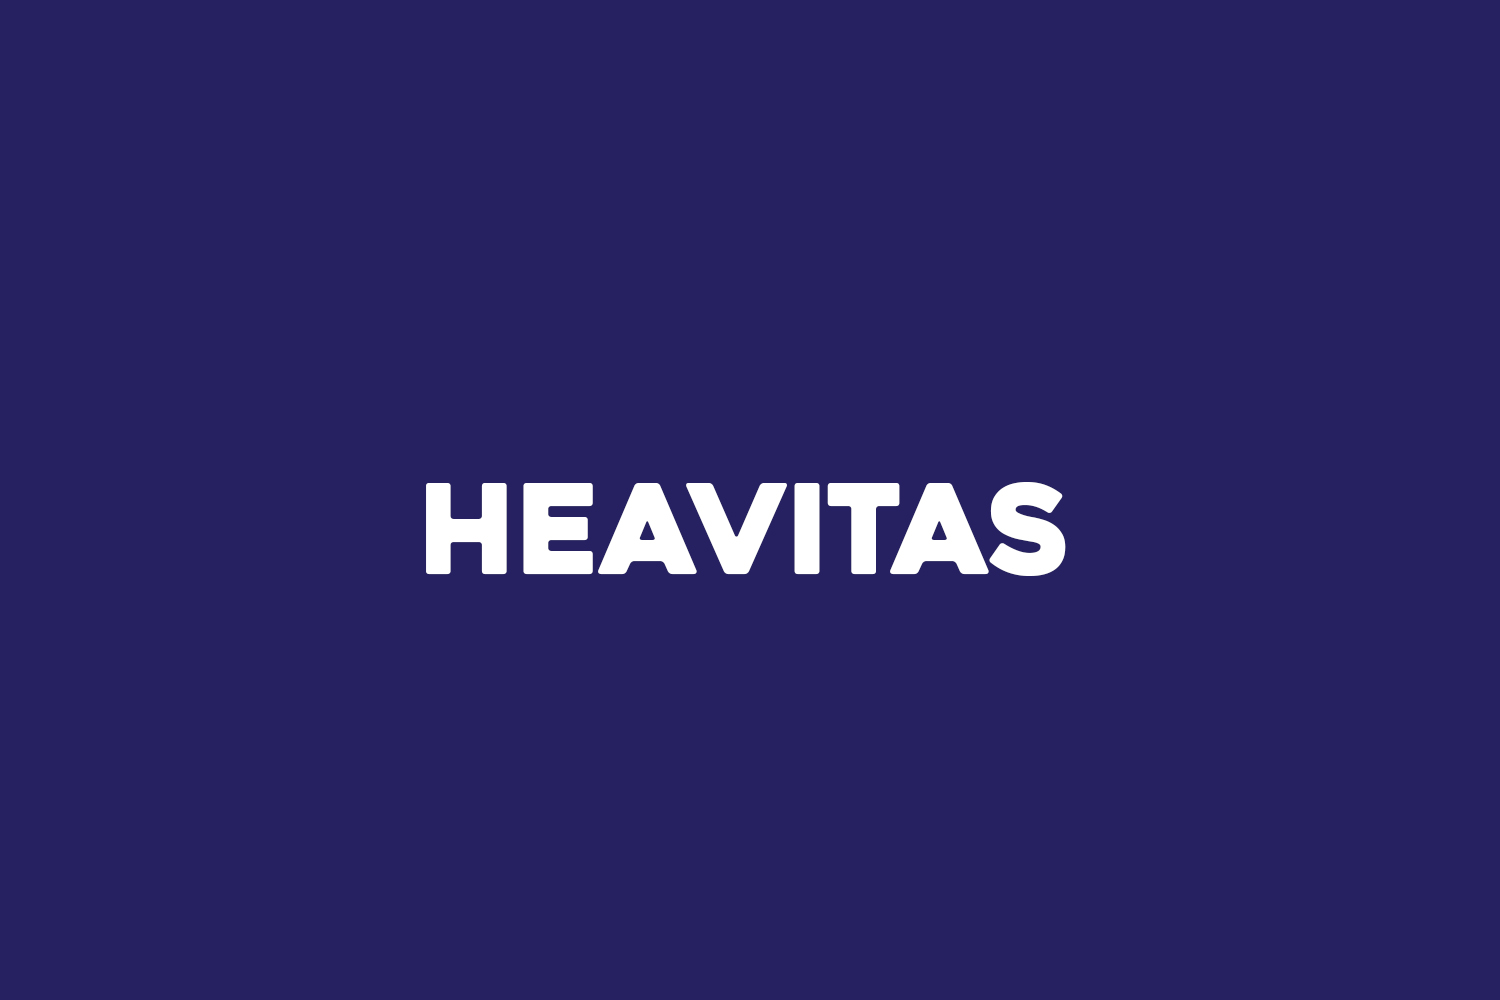 Heavitas Free Font